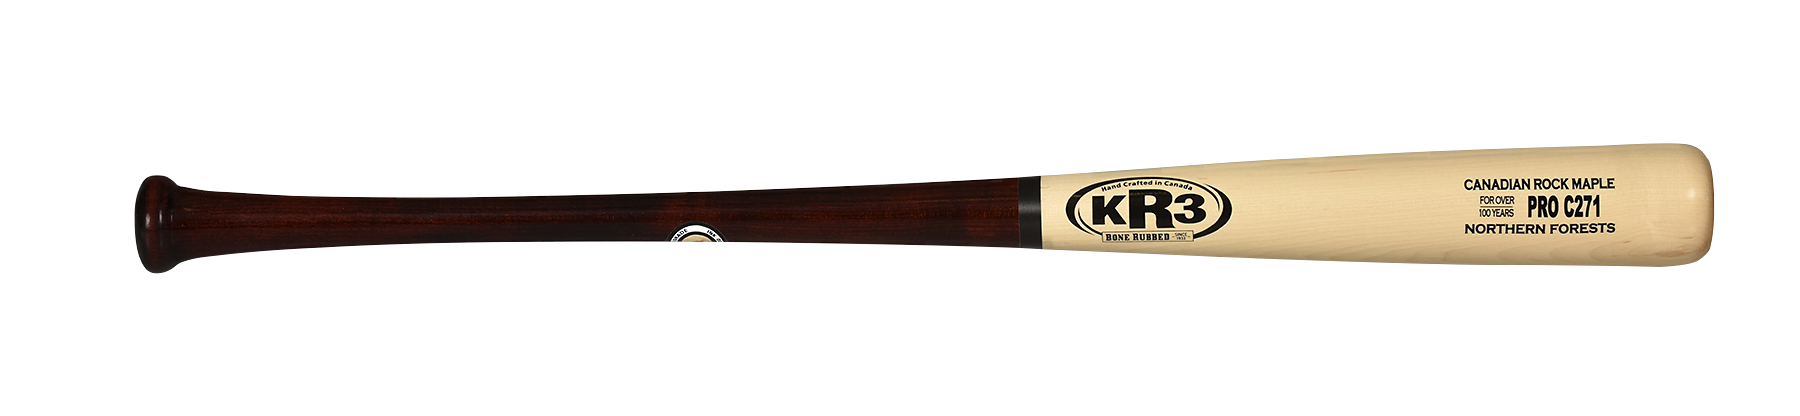 Louisville Slugger Hard Maple M110 Pink Wood Baseball Bat: WBHM110-PK Adult